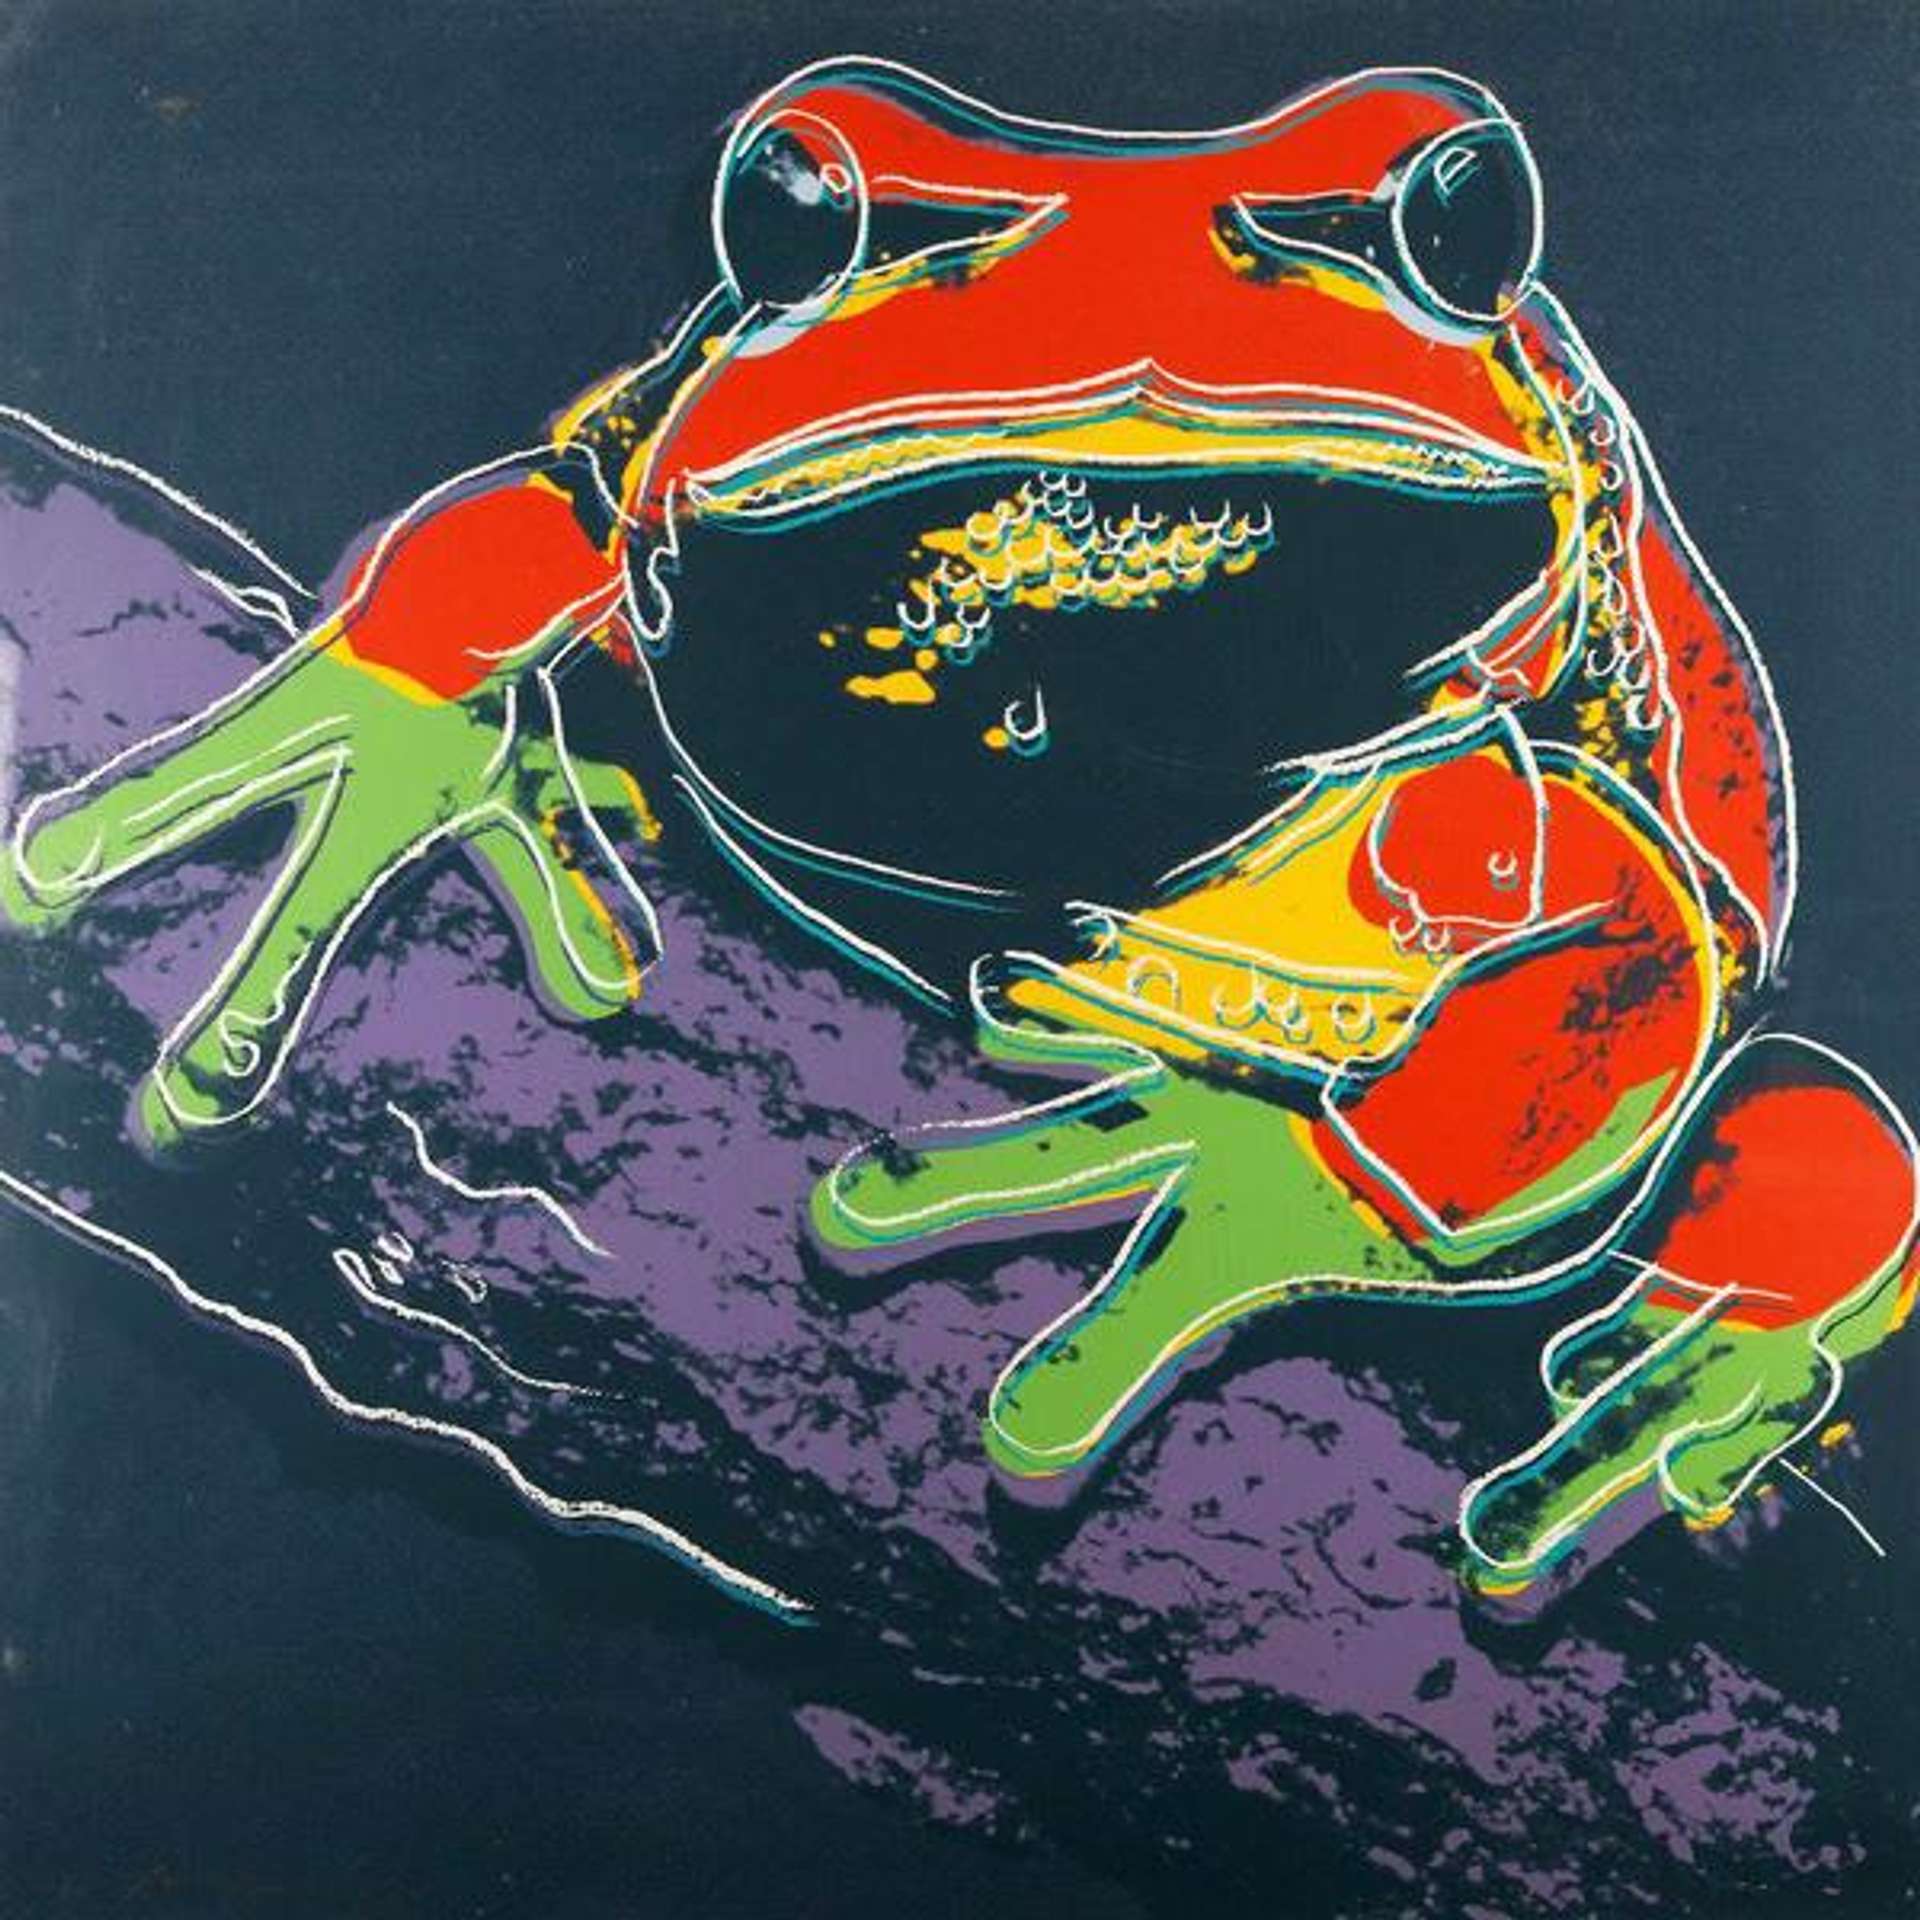 Andy Warhol: Pine Barrens Tree Frog (F. & S. II.294) - Signed Print